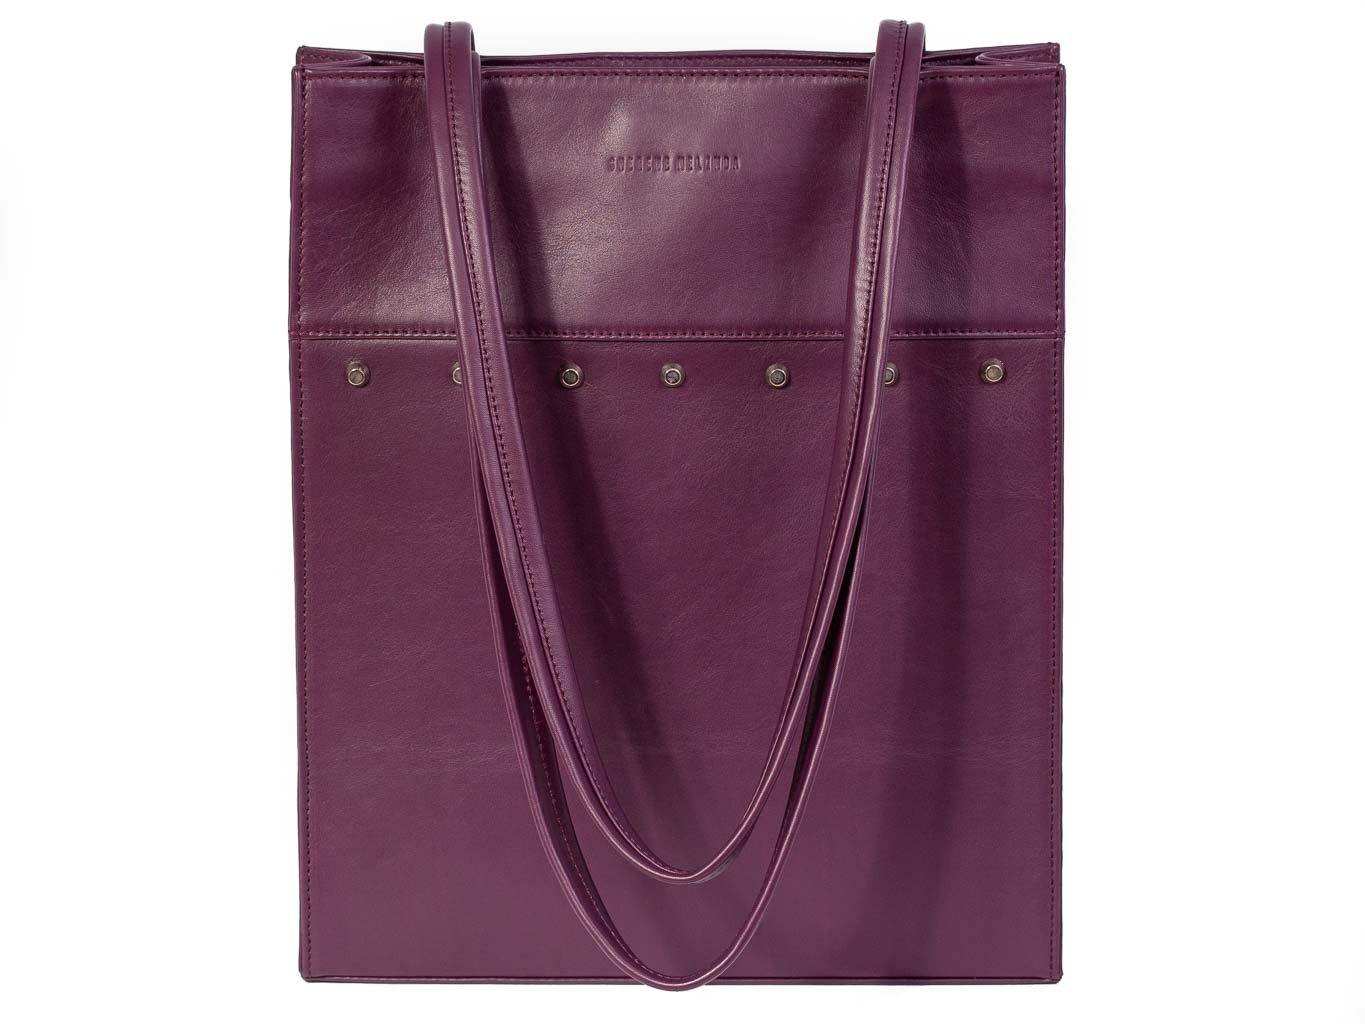 Tote Studded Handbag in Deep Purple by Sherene Melinda front handle